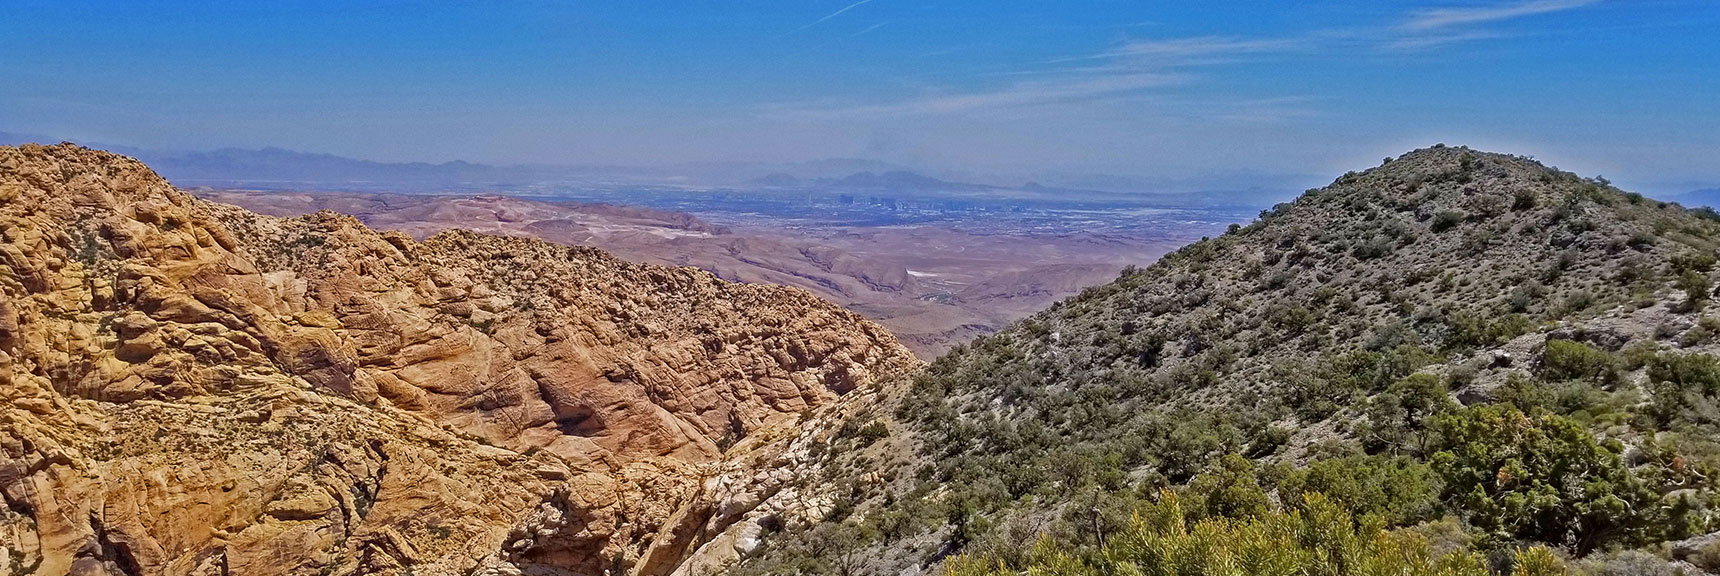 More of the Peak Just North of Windy Peak. Las Vegas Valley, Frenchman Mountain Behind in Distance | Windy Peak | Rainbow Mountain Wilderness, Nevada